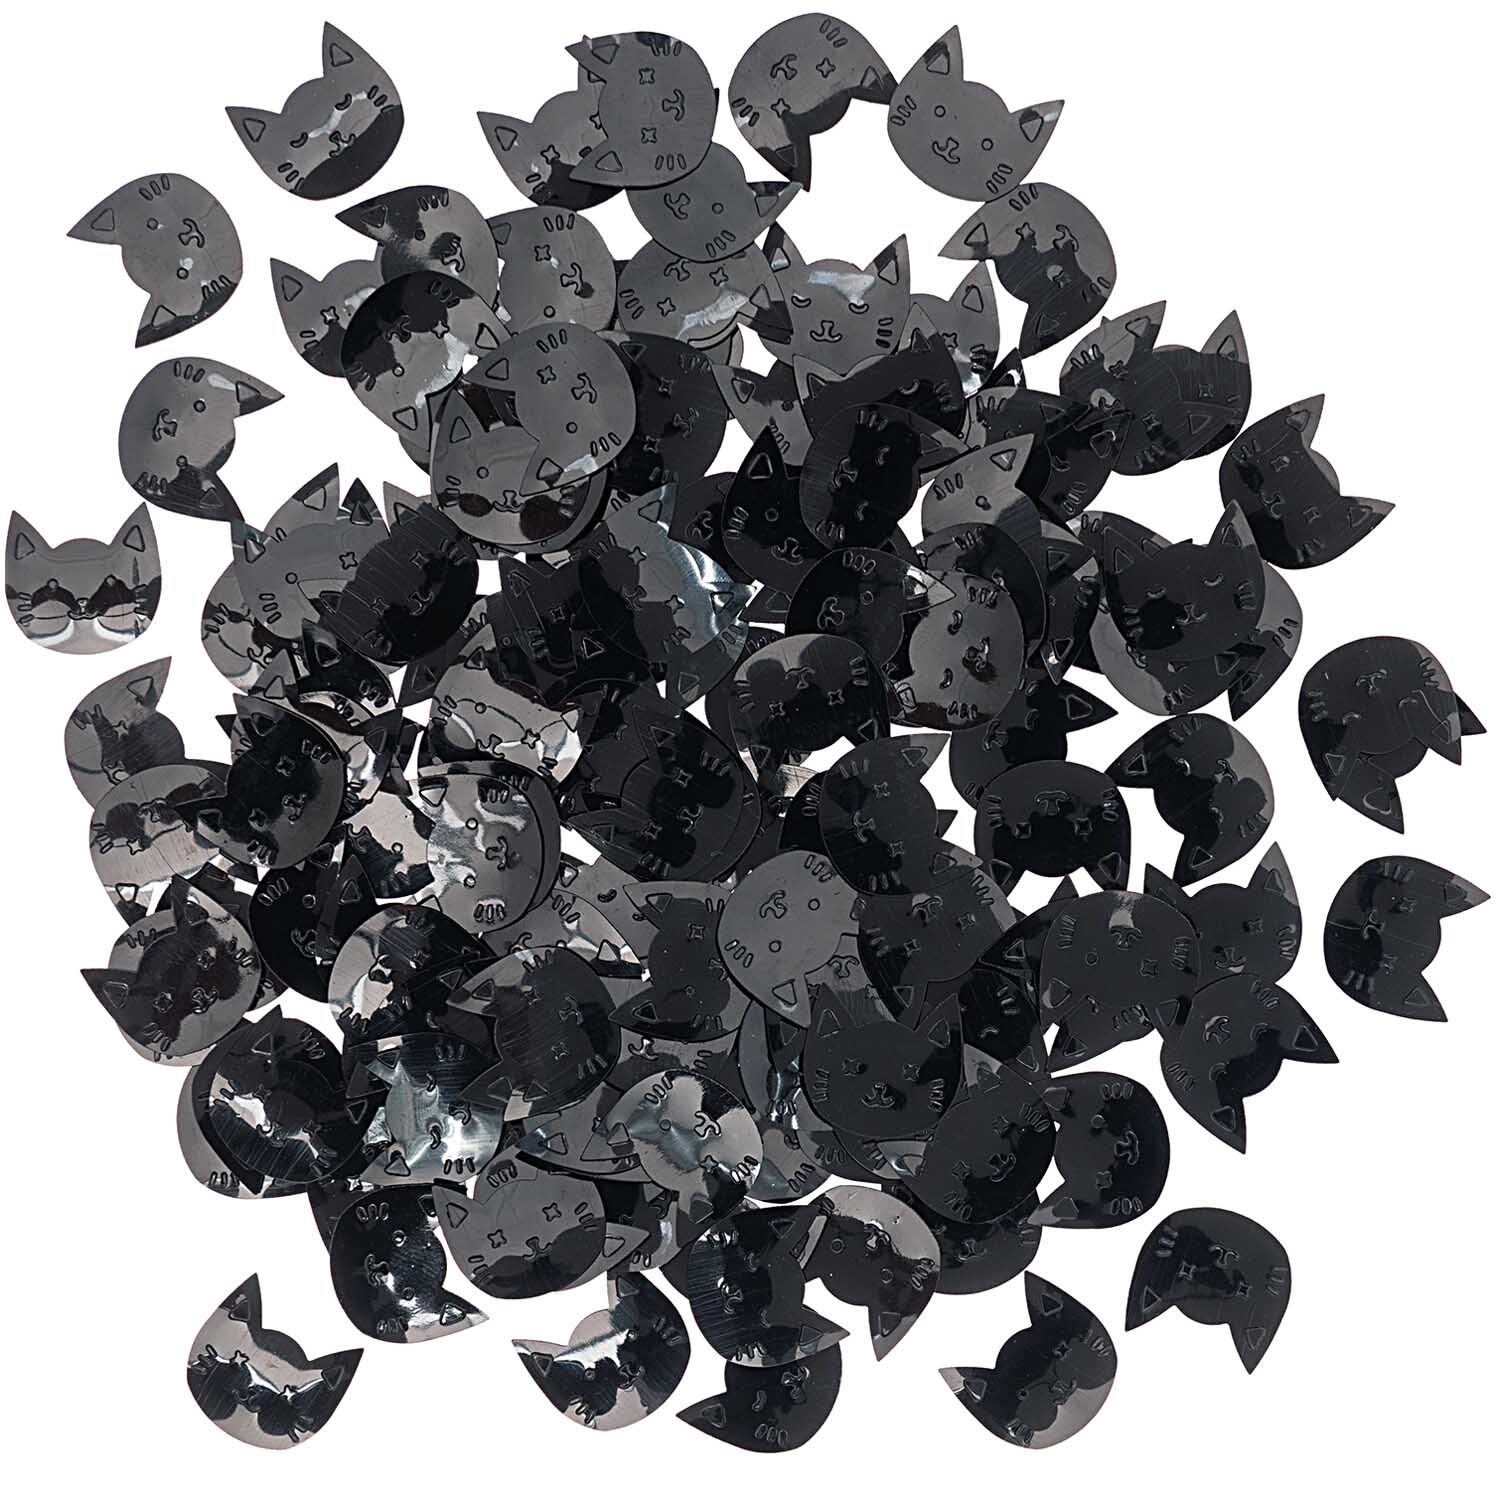 Flitterstreu Katzen Mix schwarz 200 Stück